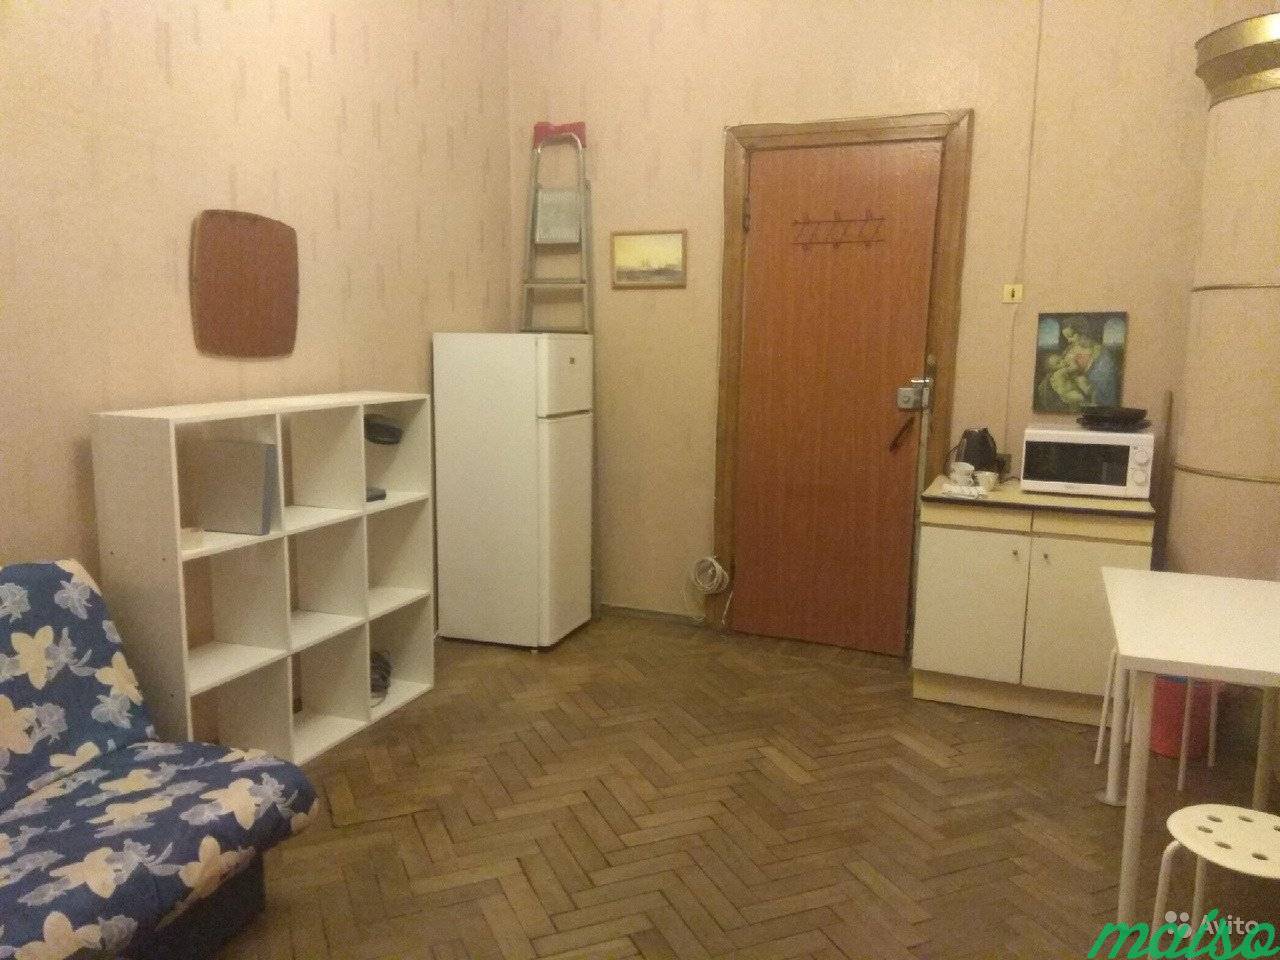 Комната 16.5 м² в >, 9-к, 2/6 эт. в Санкт-Петербурге. Фото 2